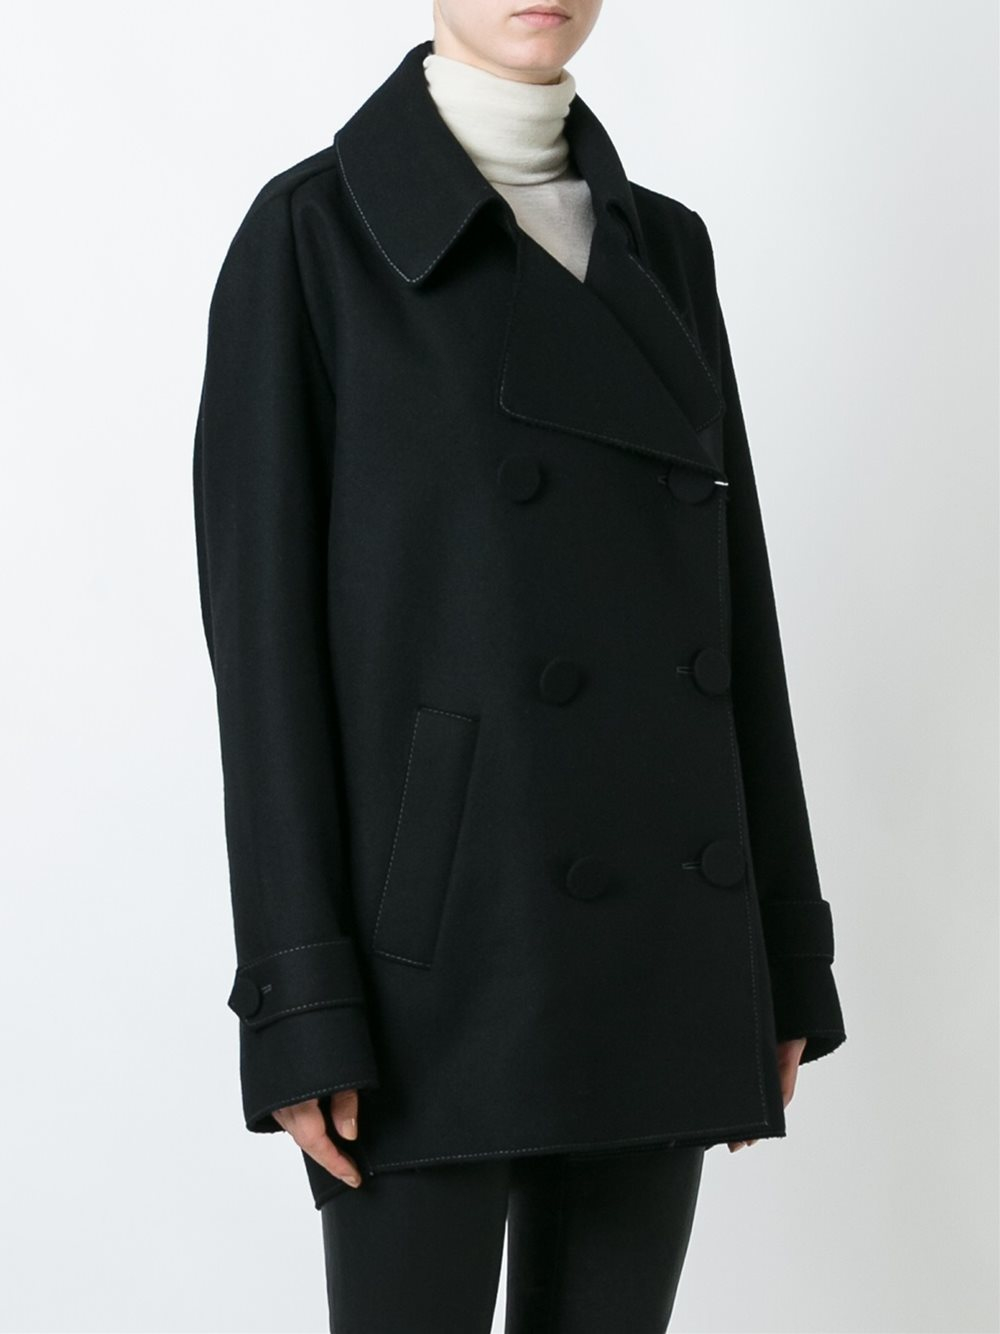 Lyst - Maison Margiela Contrast Stitch Jacket in Black